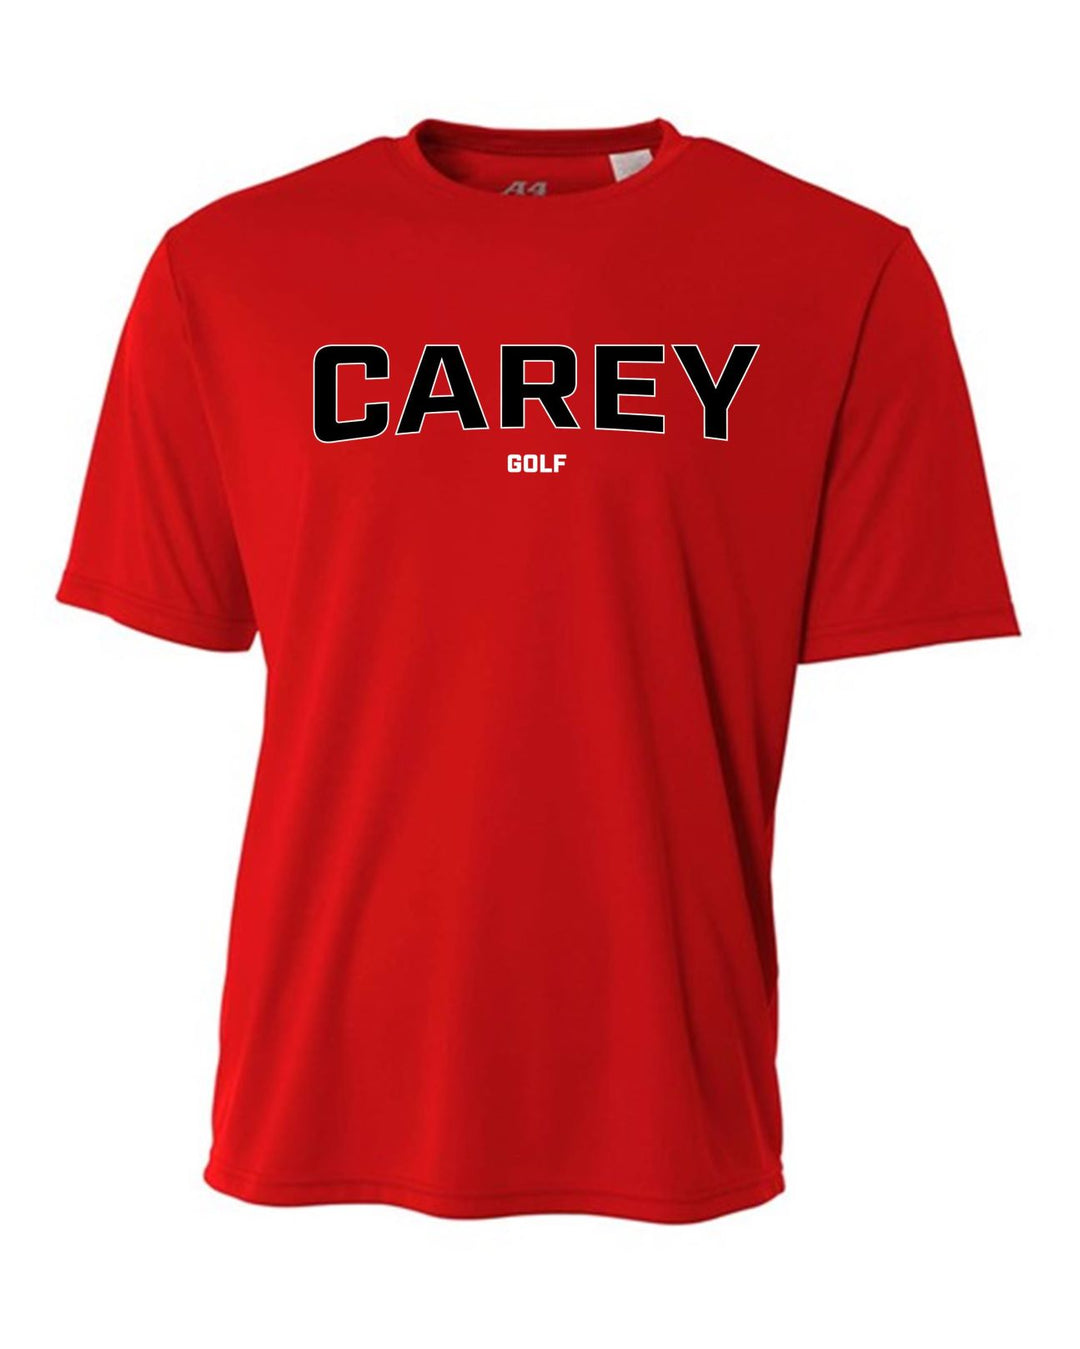 WCU Golf Youth Short-Sleeve Performance Shirt WCU Golf Red CAREY - Third Coast Soccer